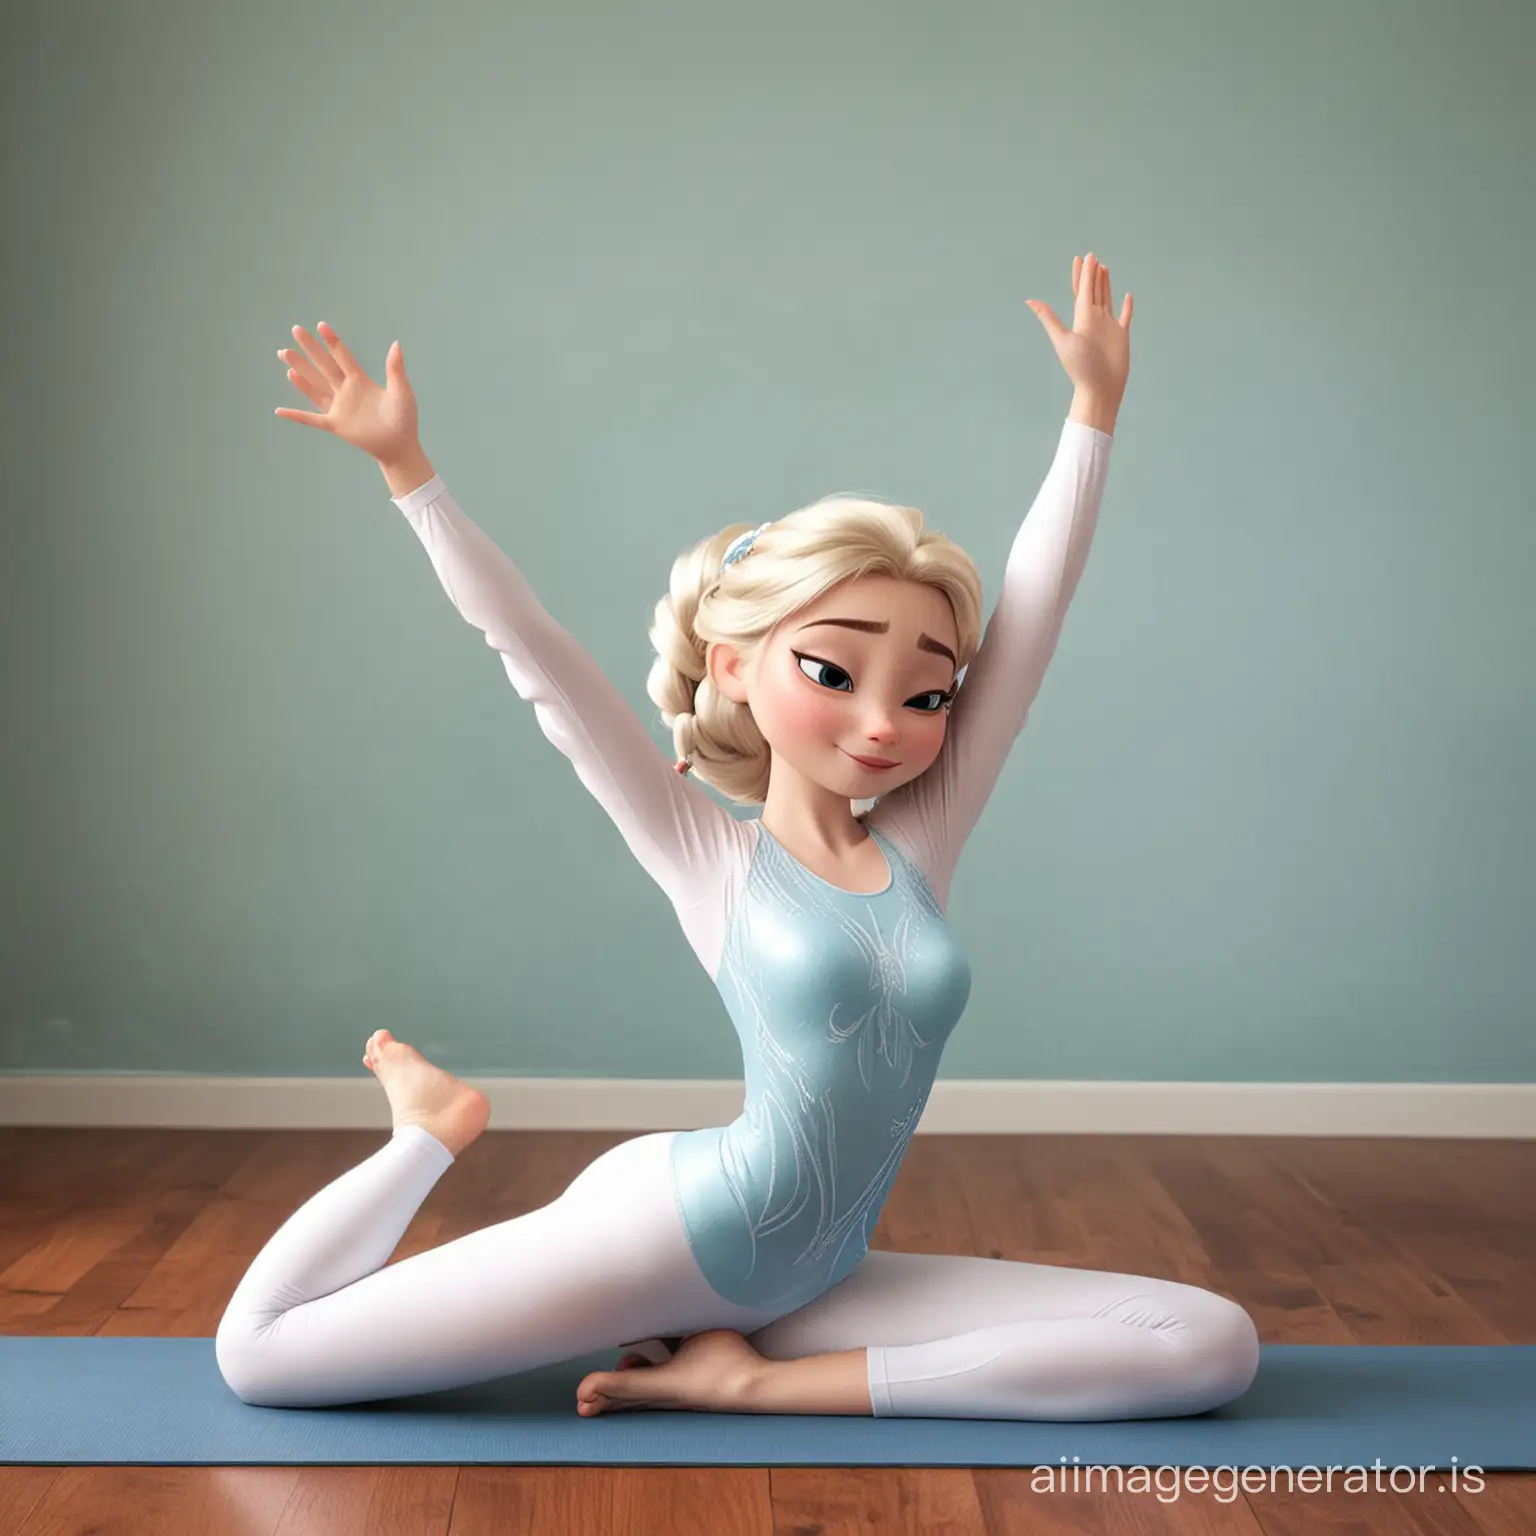 elsa doing a 
yoga pose 

